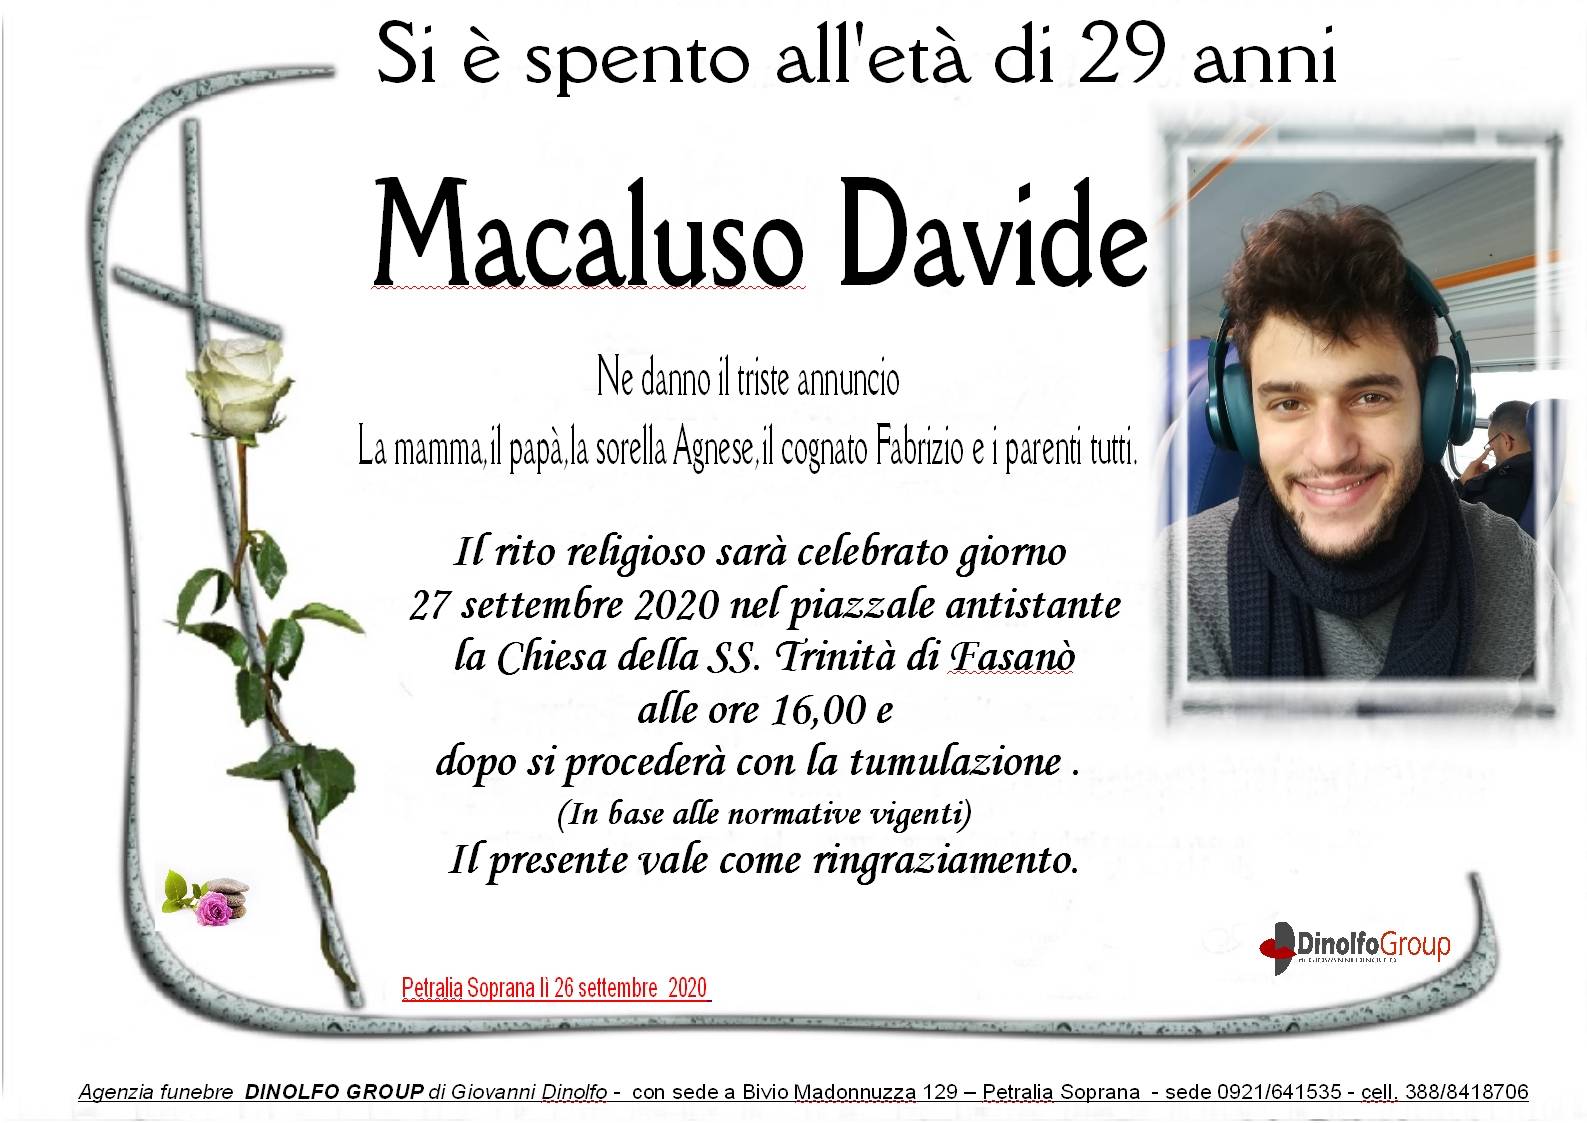 Davide Macaluso